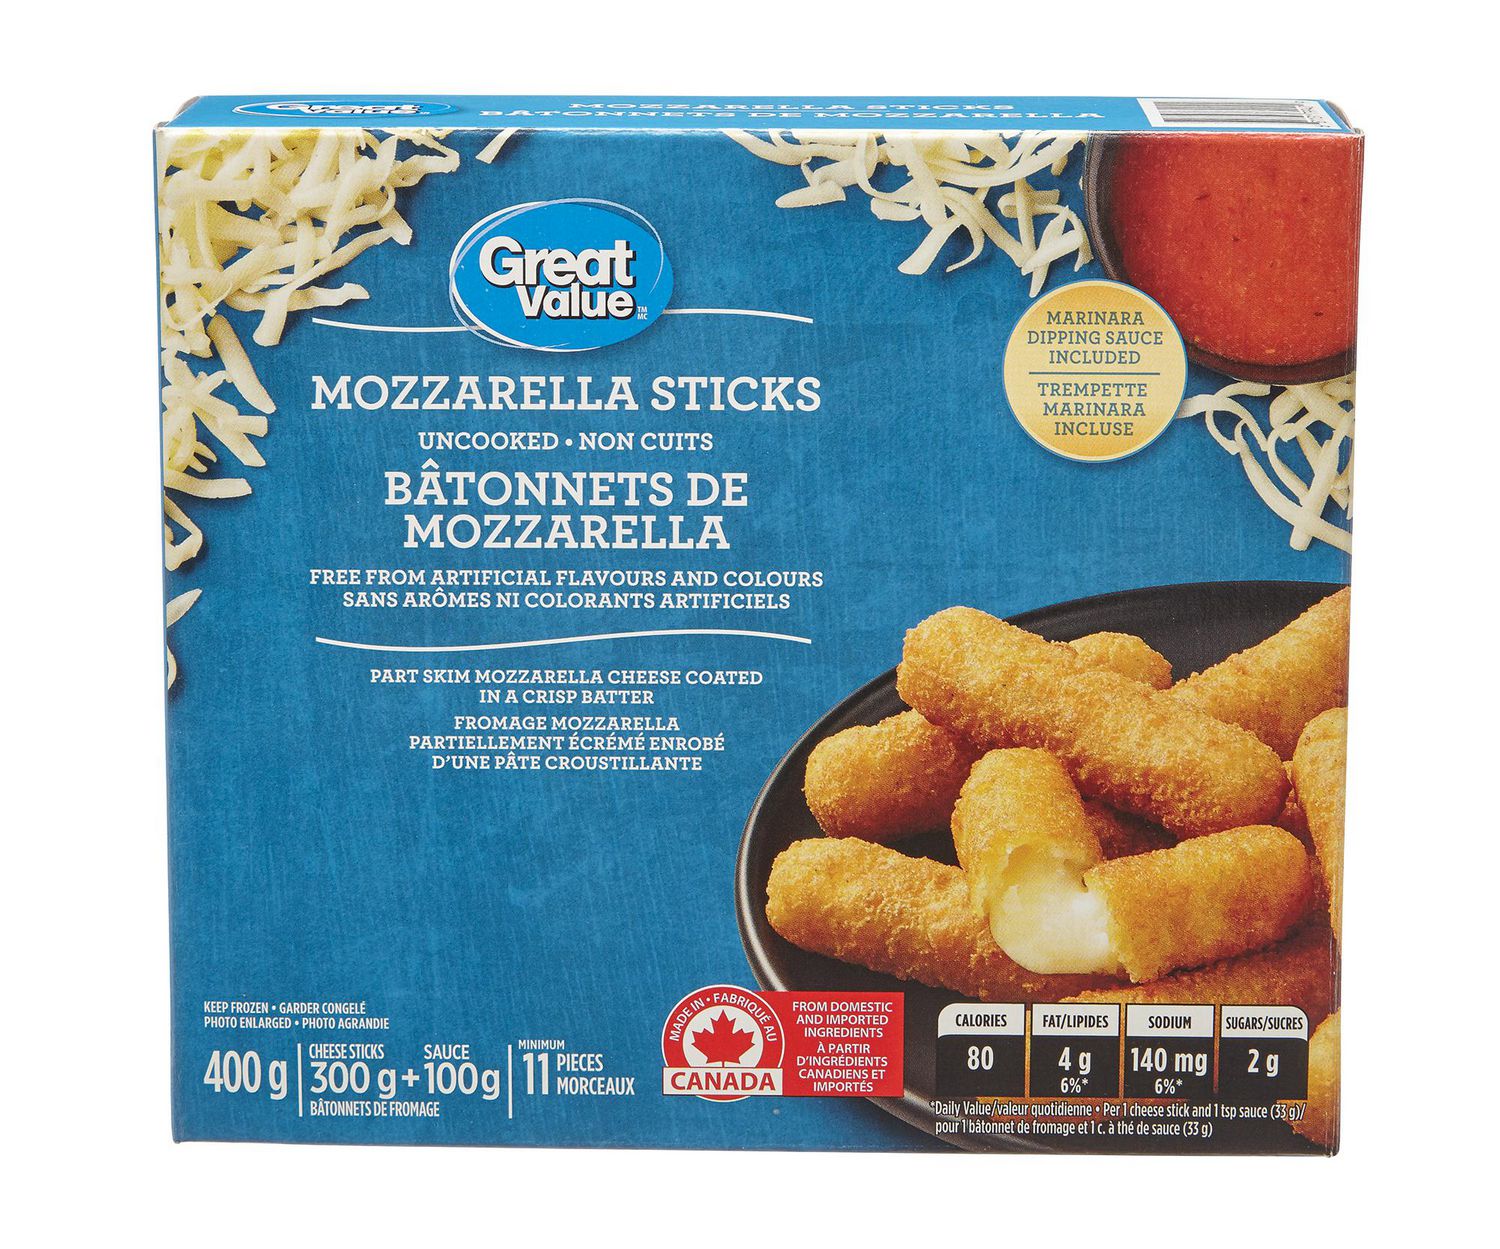 Great Value Mozzarella Sticks with Marinara Dipping Sauce | Walmart Canada